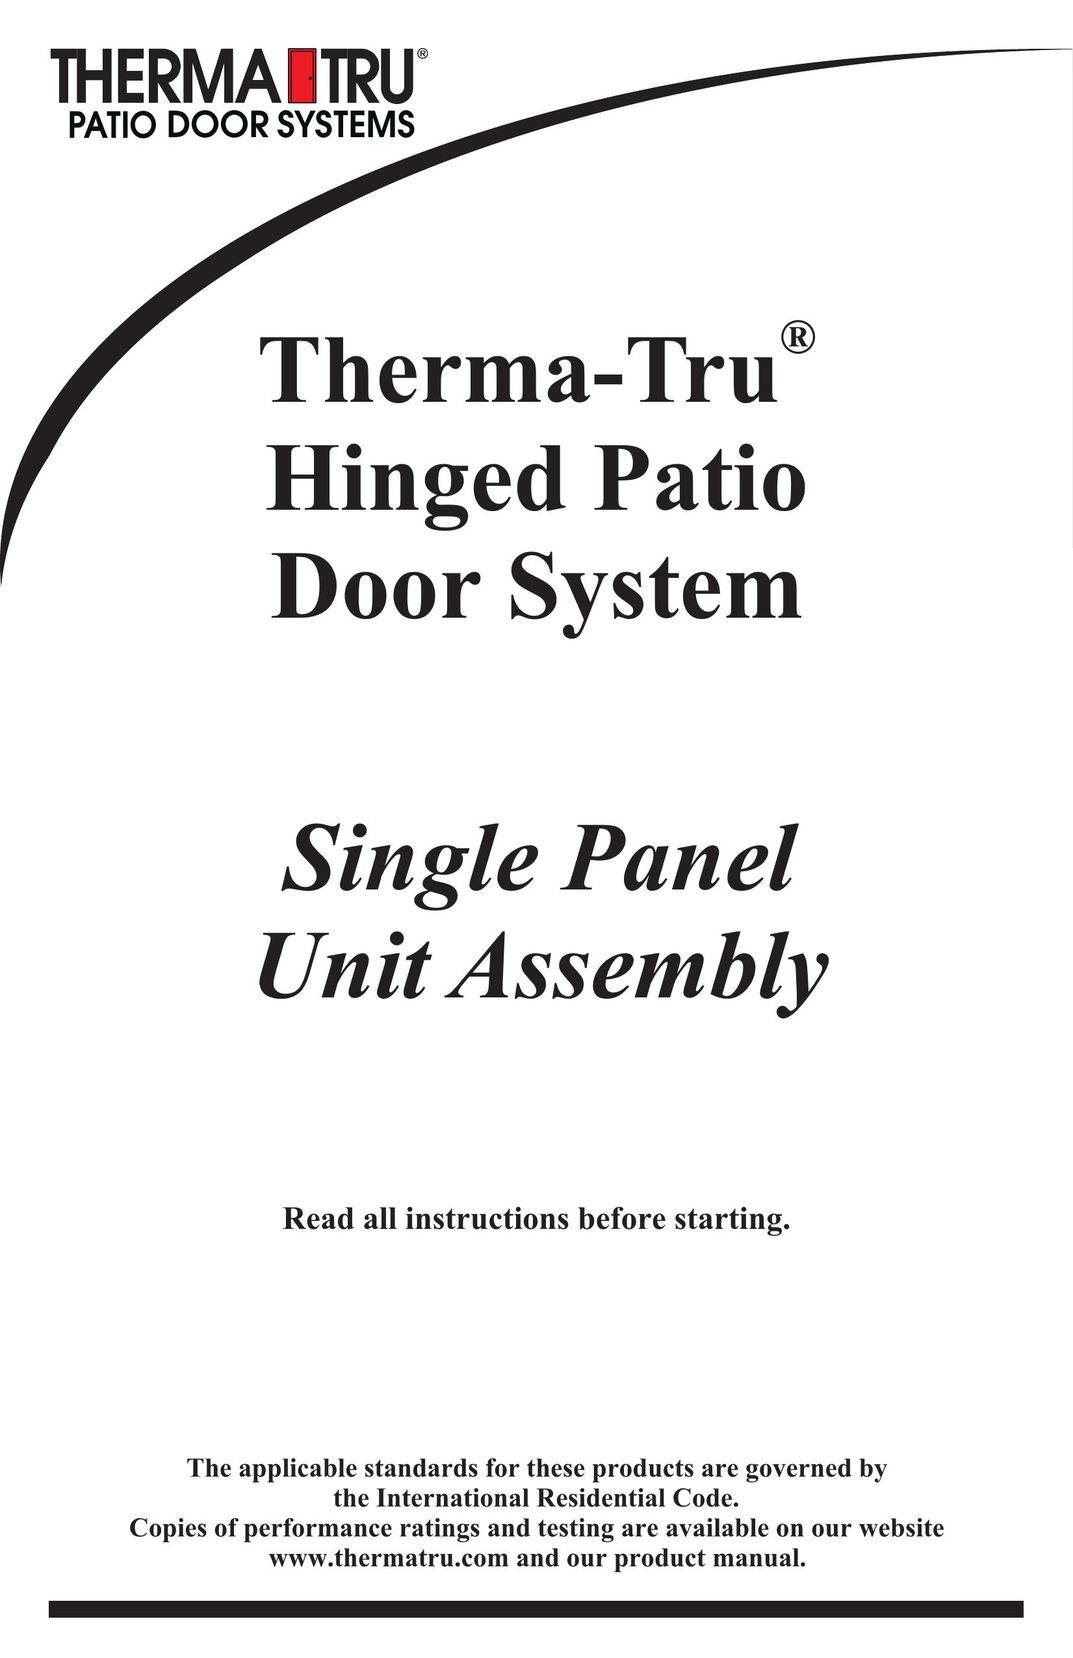 Therma-Tru Hinged Patio Door System Single Panel Assembly Unit Door User Manual